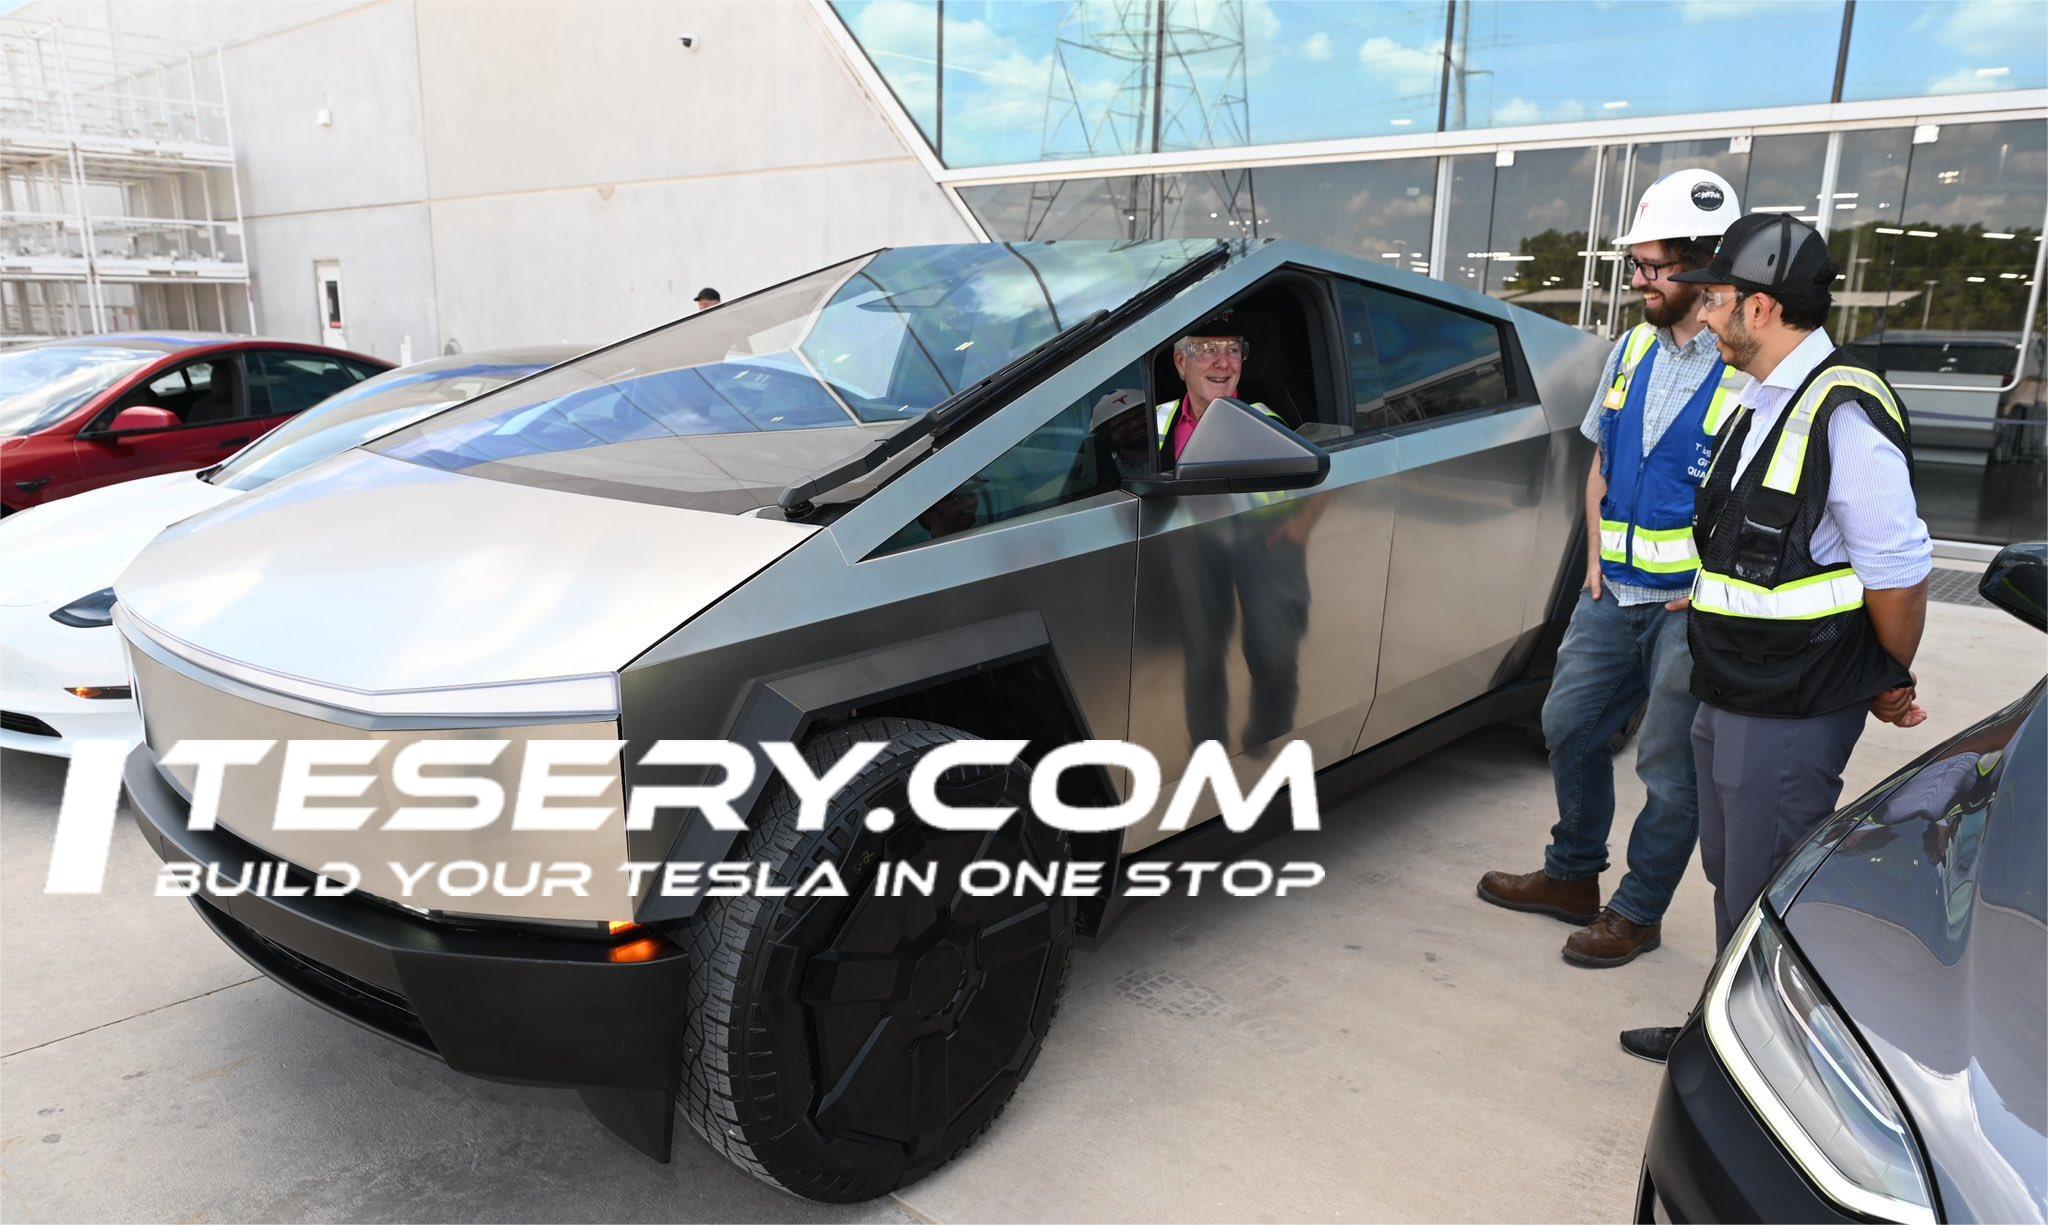 US Senator Cornyn Meets Tesla's Elon Musk at Gigafactory Texas - Tesery Official Store